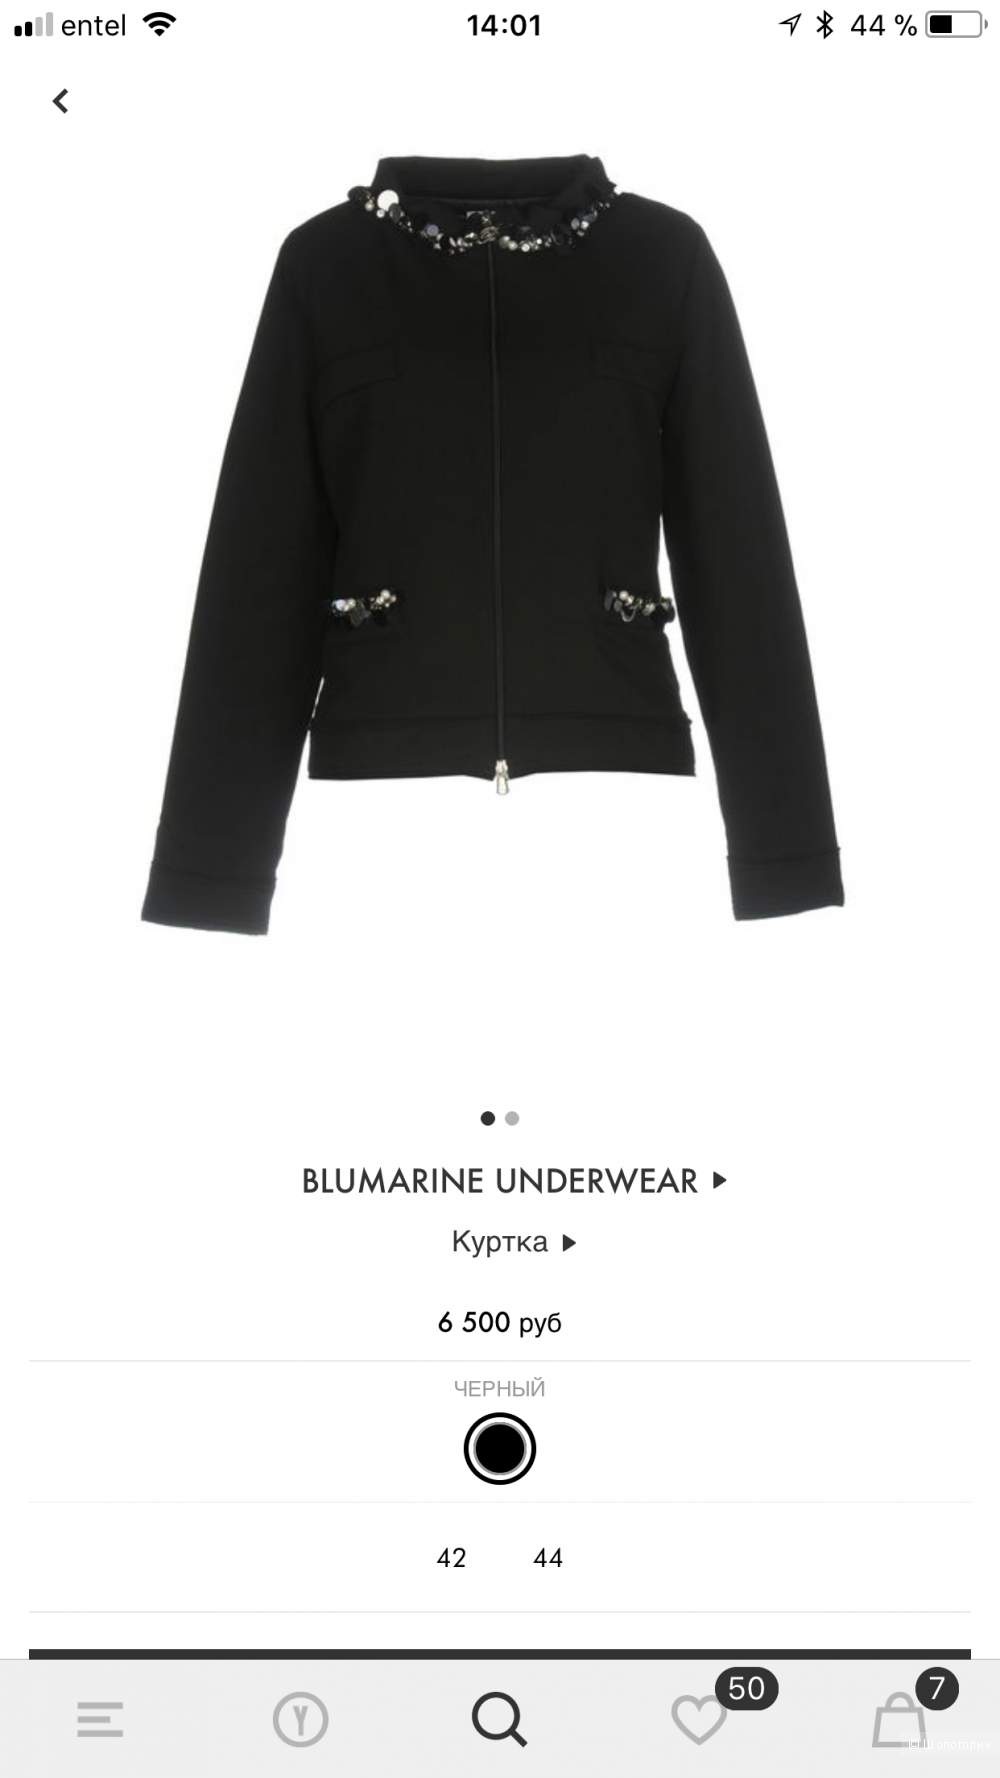 Куртка Blumarine Underwear 42IT (44-46 рус) новая. Оригинал